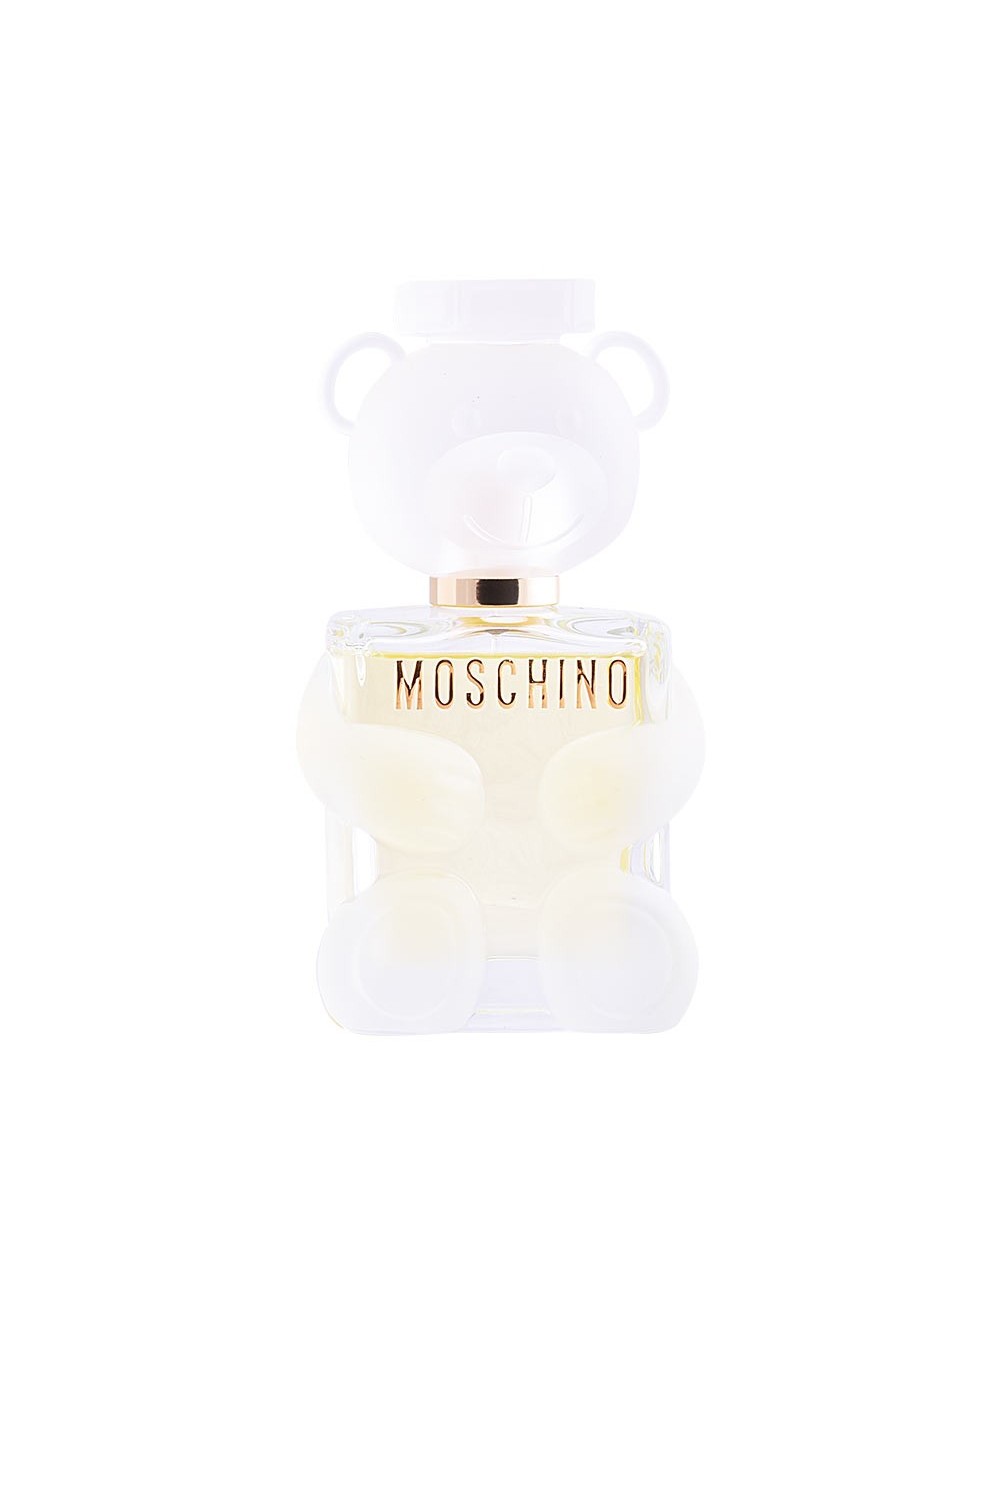 Moschino Toy 2 Eau De Perfume Spray 50ml